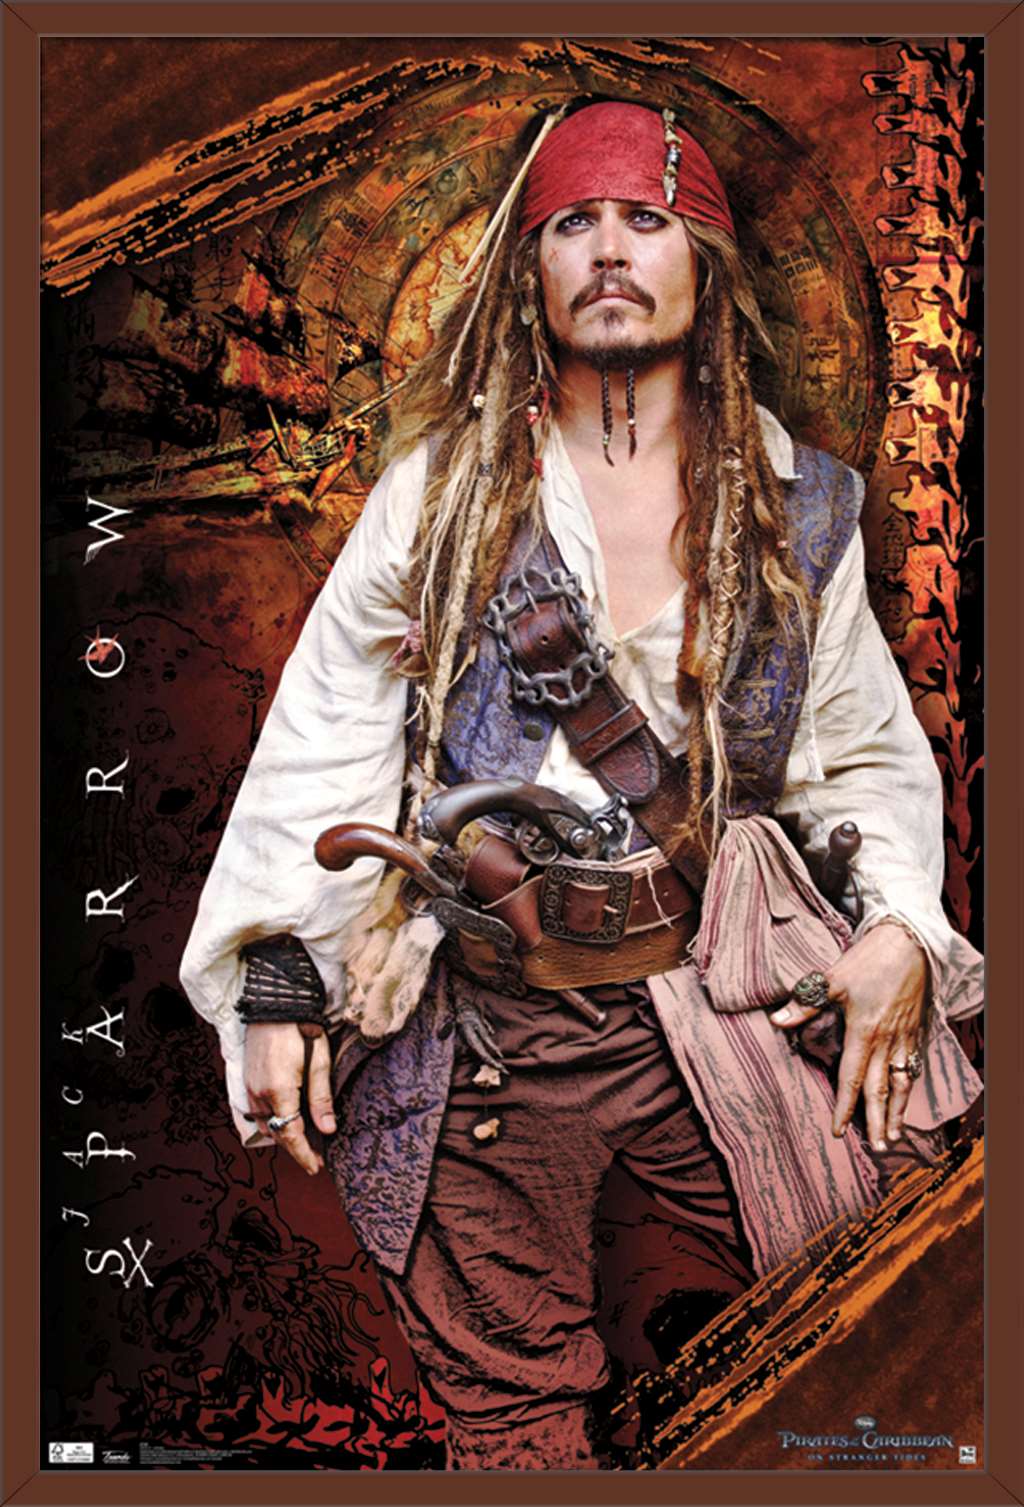 Disney Pirates of the Caribbean: On Stranger Tides - Johnny Depp Wall Poster, 22.375" x 34", Framed - image 1 of 2